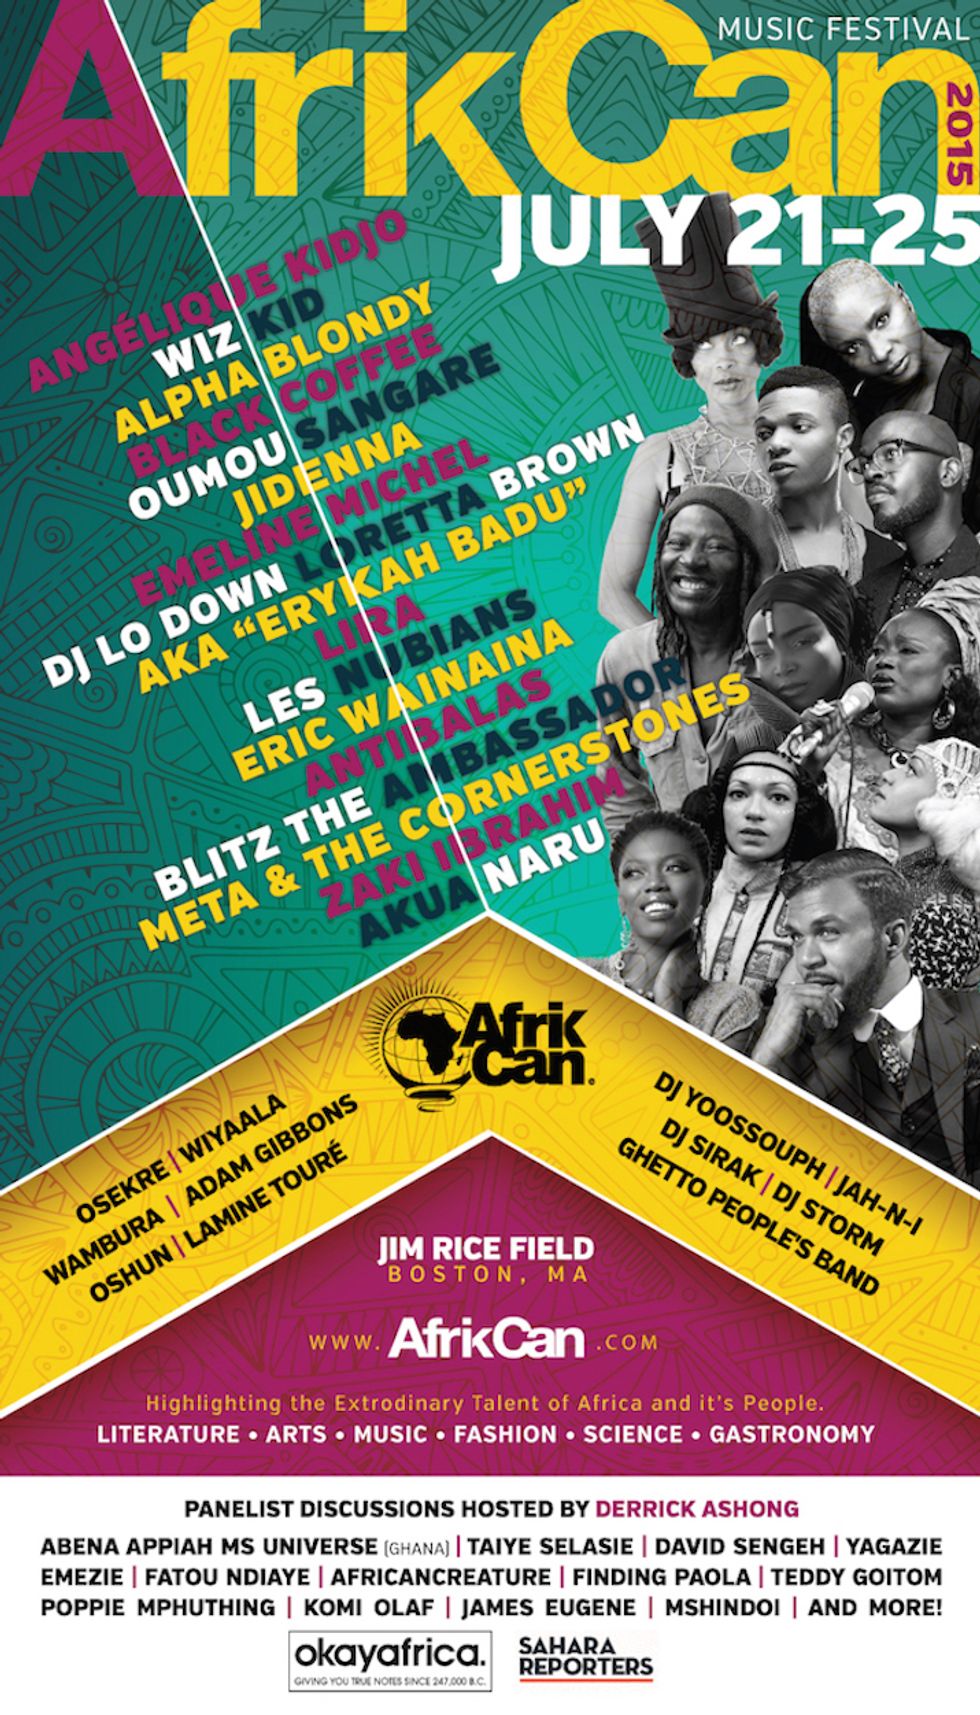 AfrikCan Festival: Alpha Blondy, Wizkid, Black Coffee, Angélique Kidjo & More In Boston [POSTPONED]